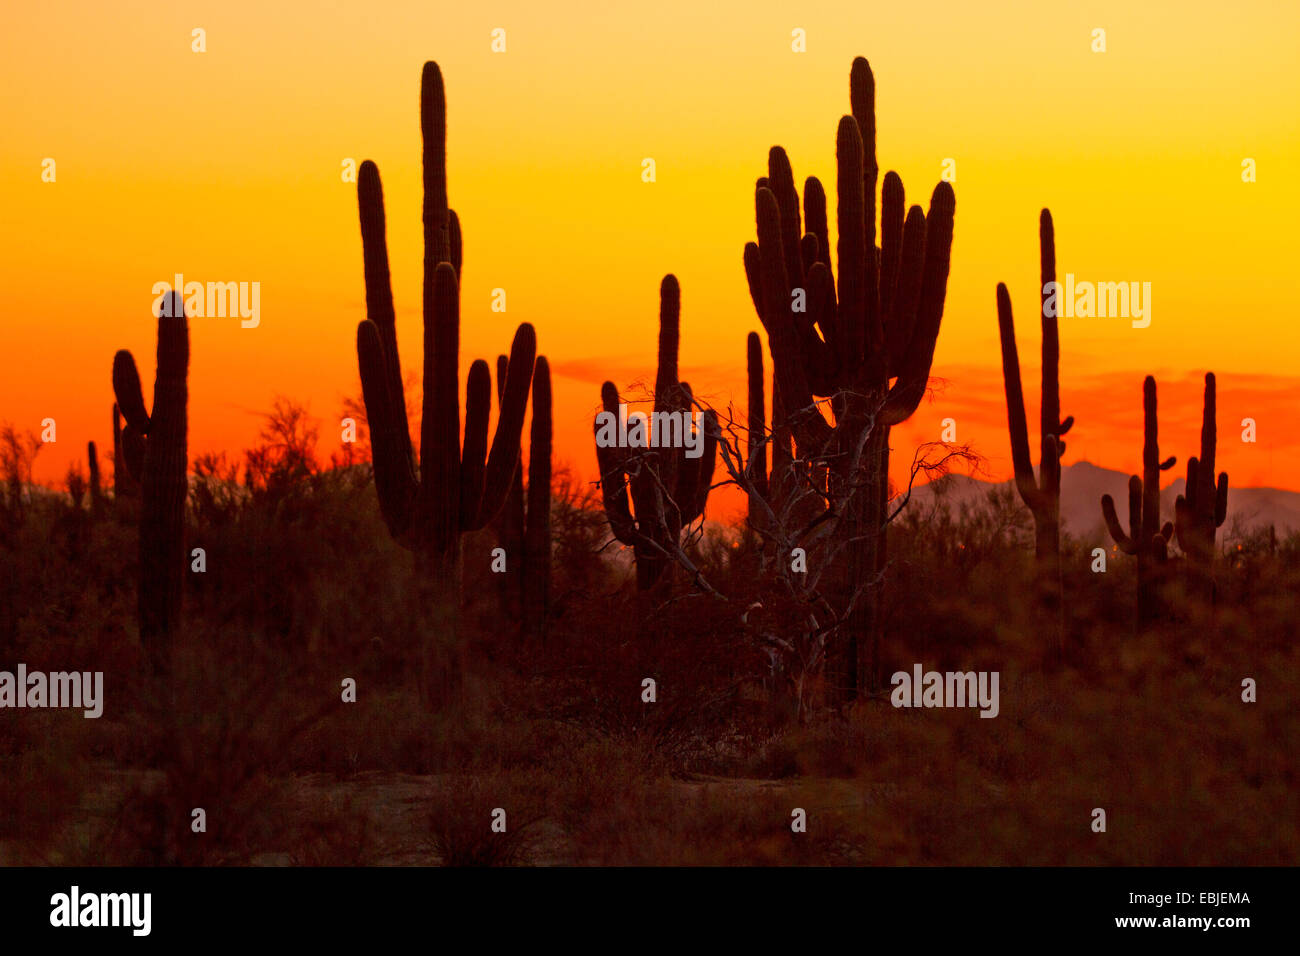 saguaro cactus (Carnegiea gigantea, Cereus giganteus), group in the evening, USA, Arizona, Phoenix Stock Photo